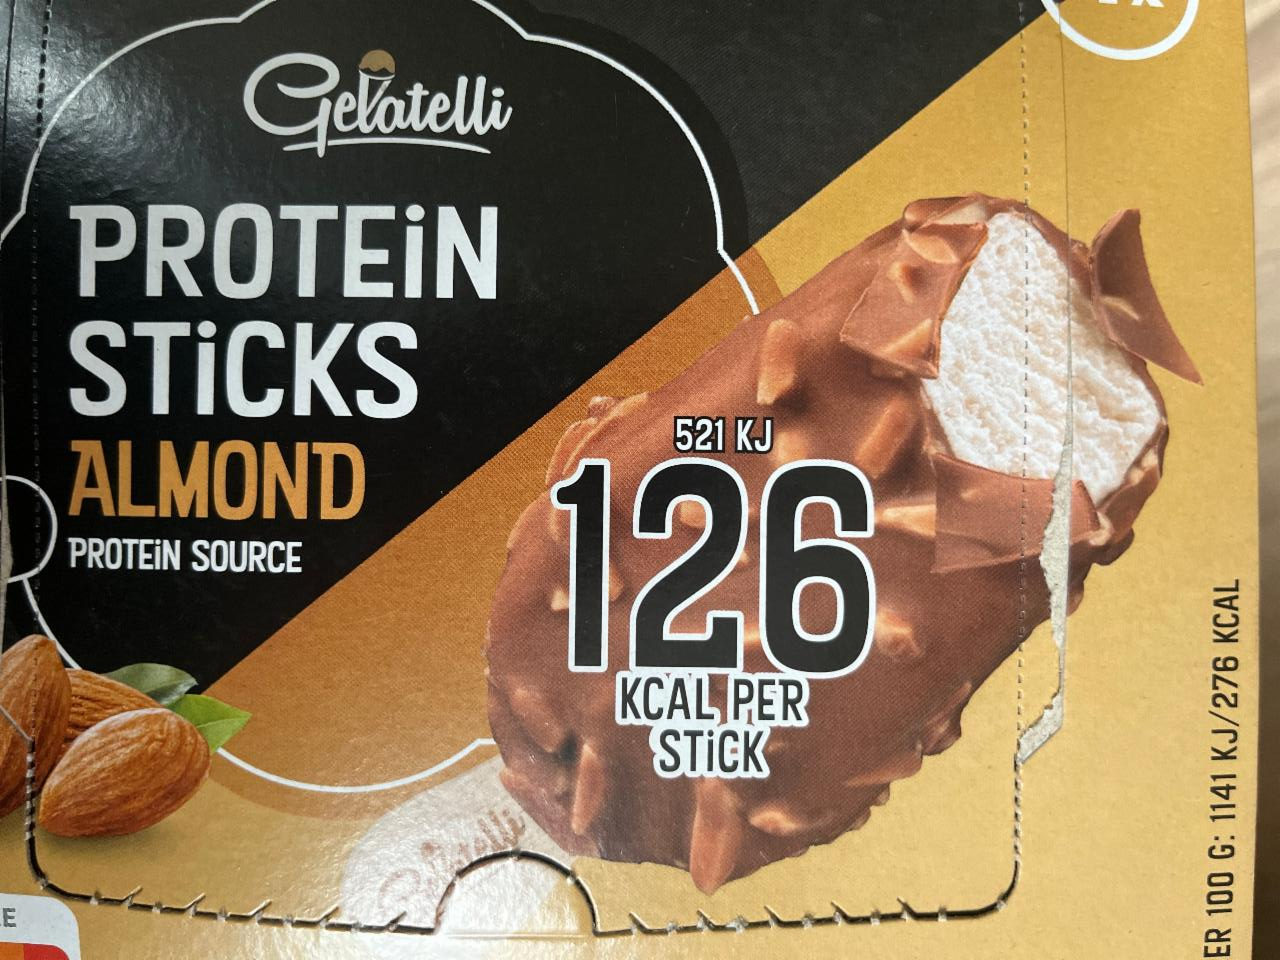 Képek - Protein sticks Almond Gelatelli